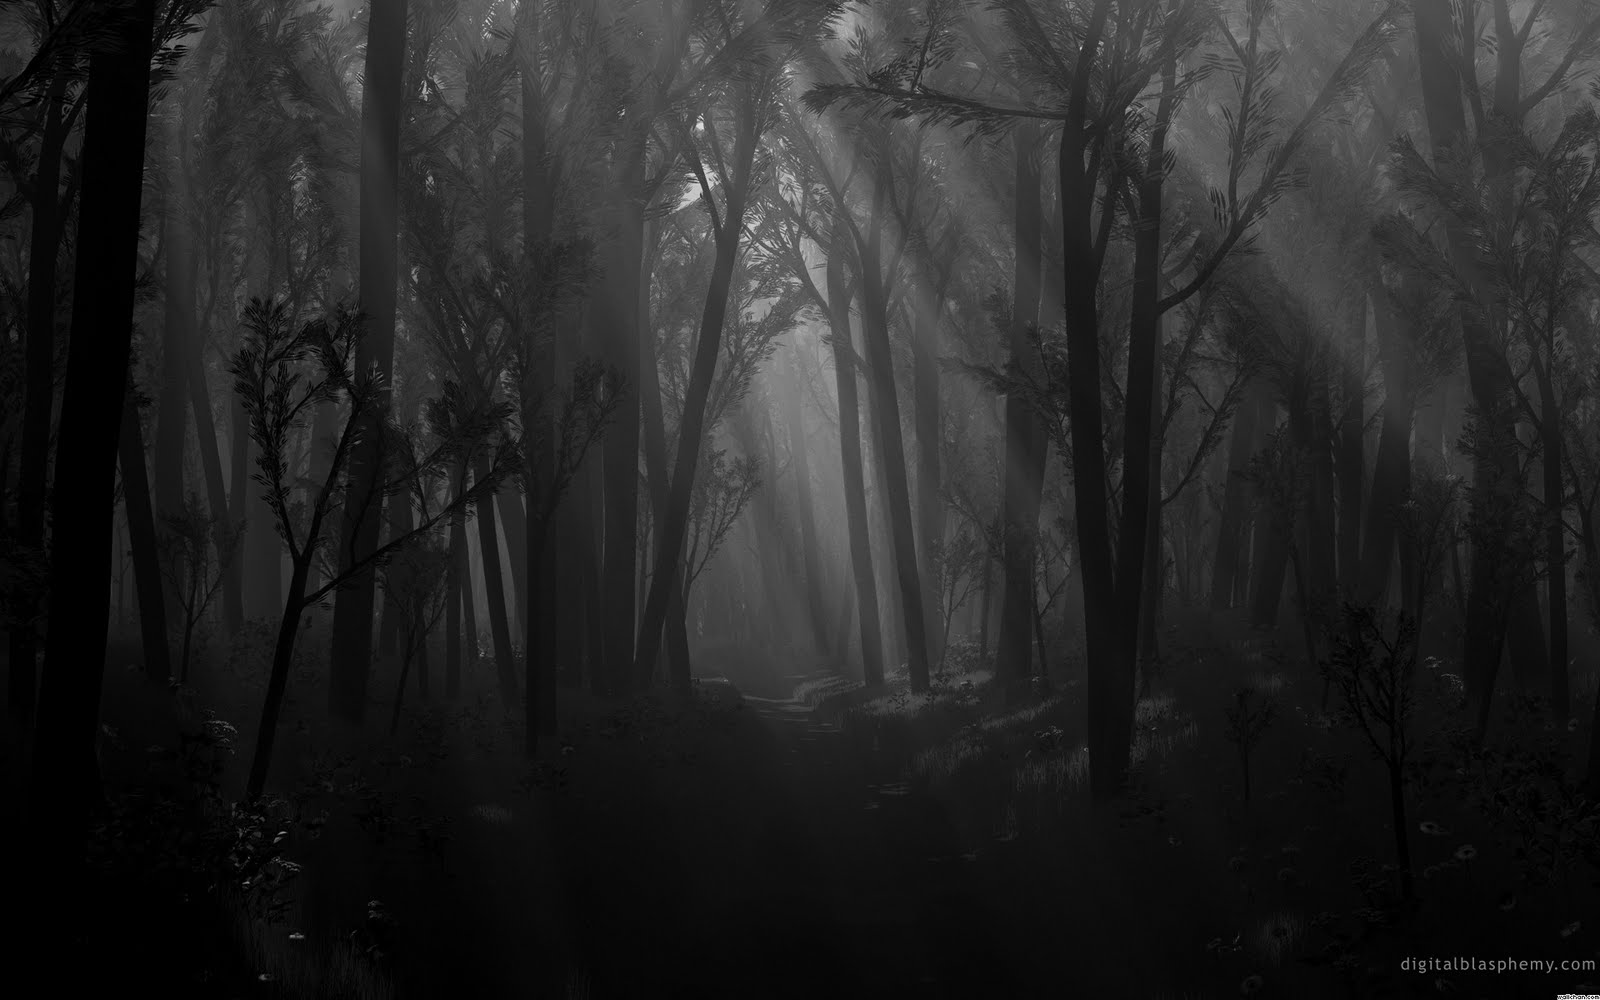  dark forest path shadows spooky monochrome wallpaper wallpaperjpg